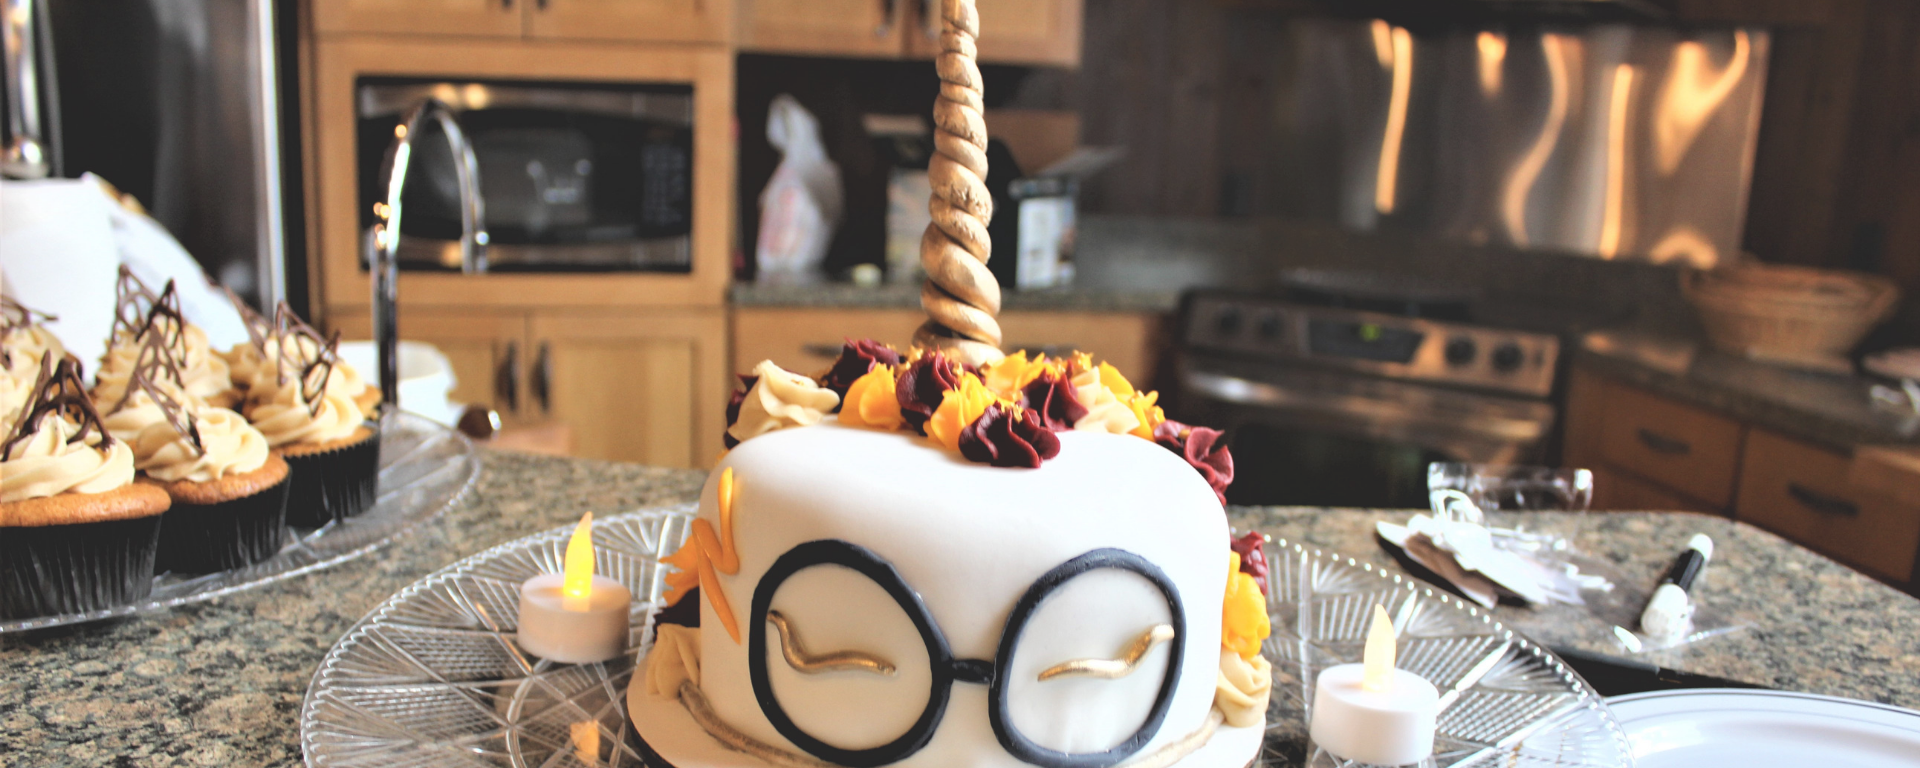 Harry Potter-themed cake